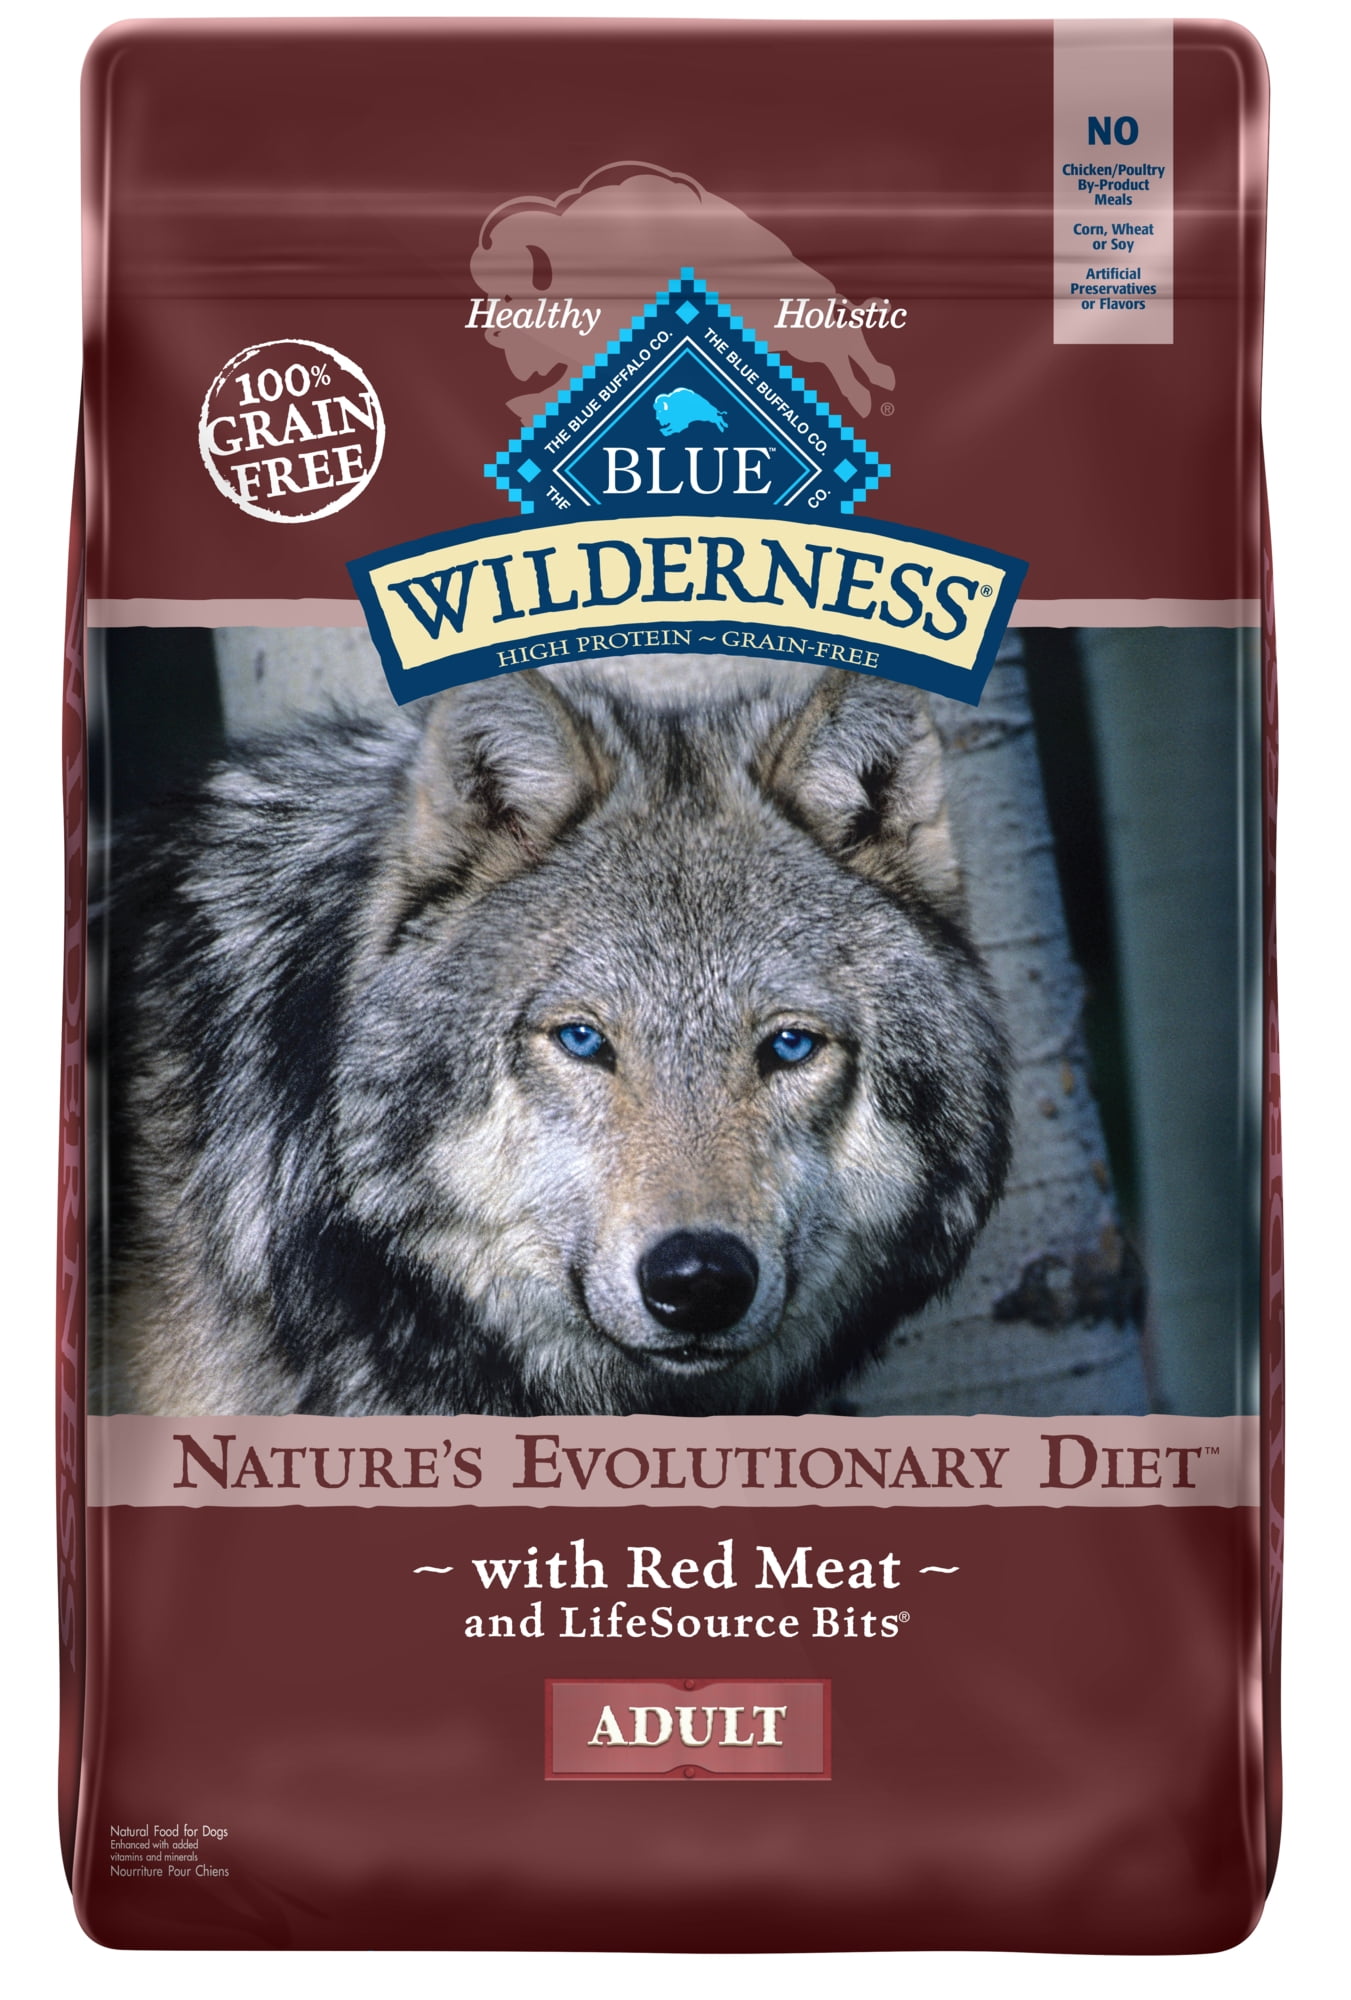 blue buffalo high protein dog food